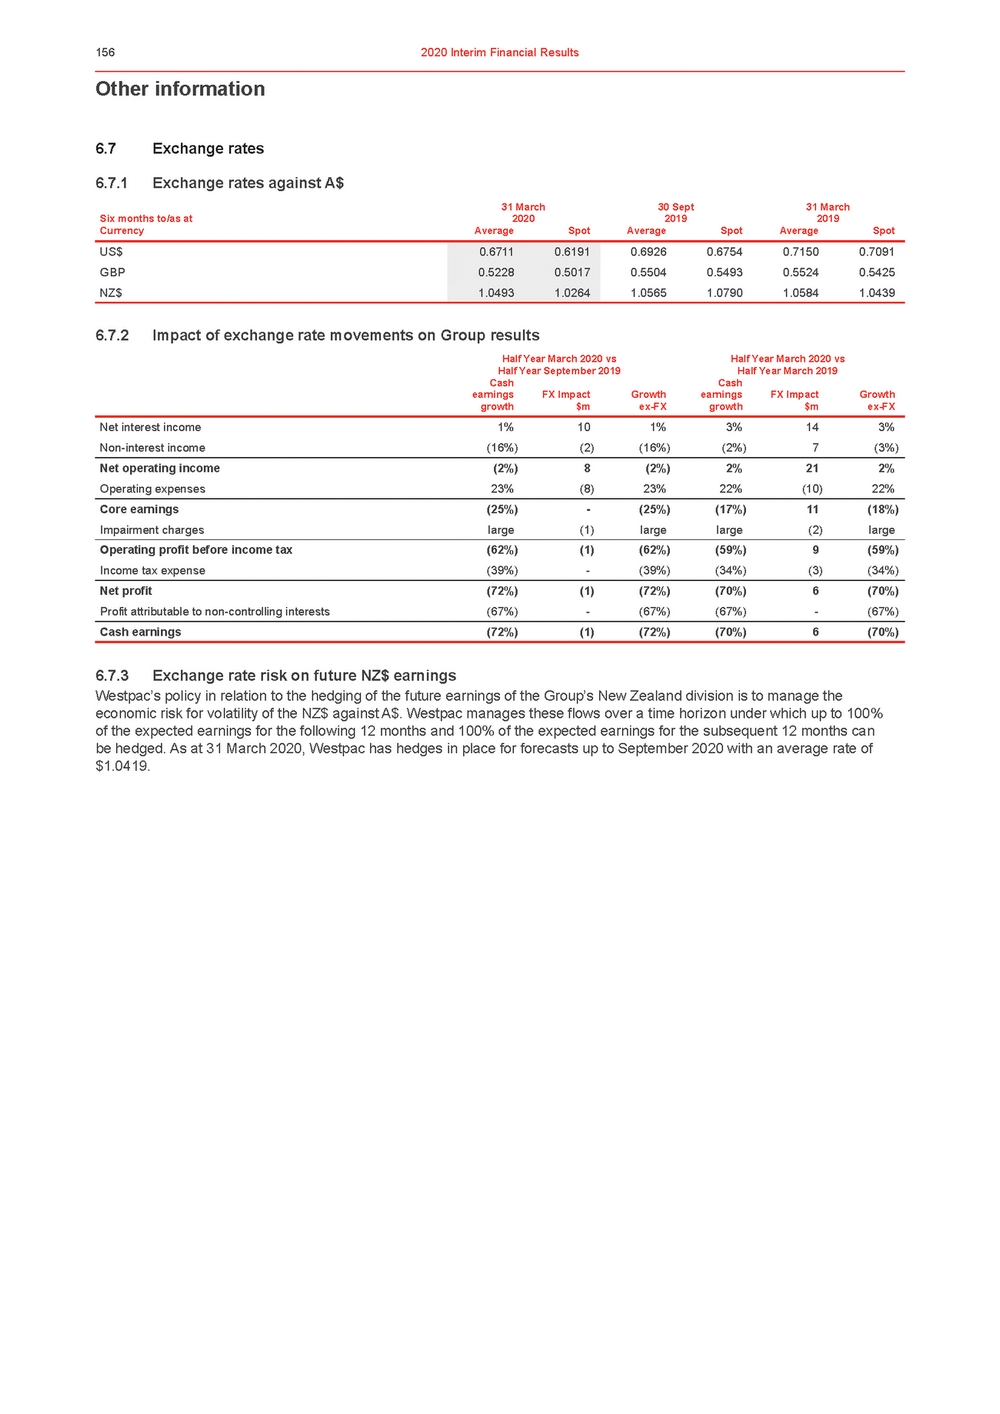 11676-3-ex1_westpac 2020 interim financial results announcement_page_161.jpg